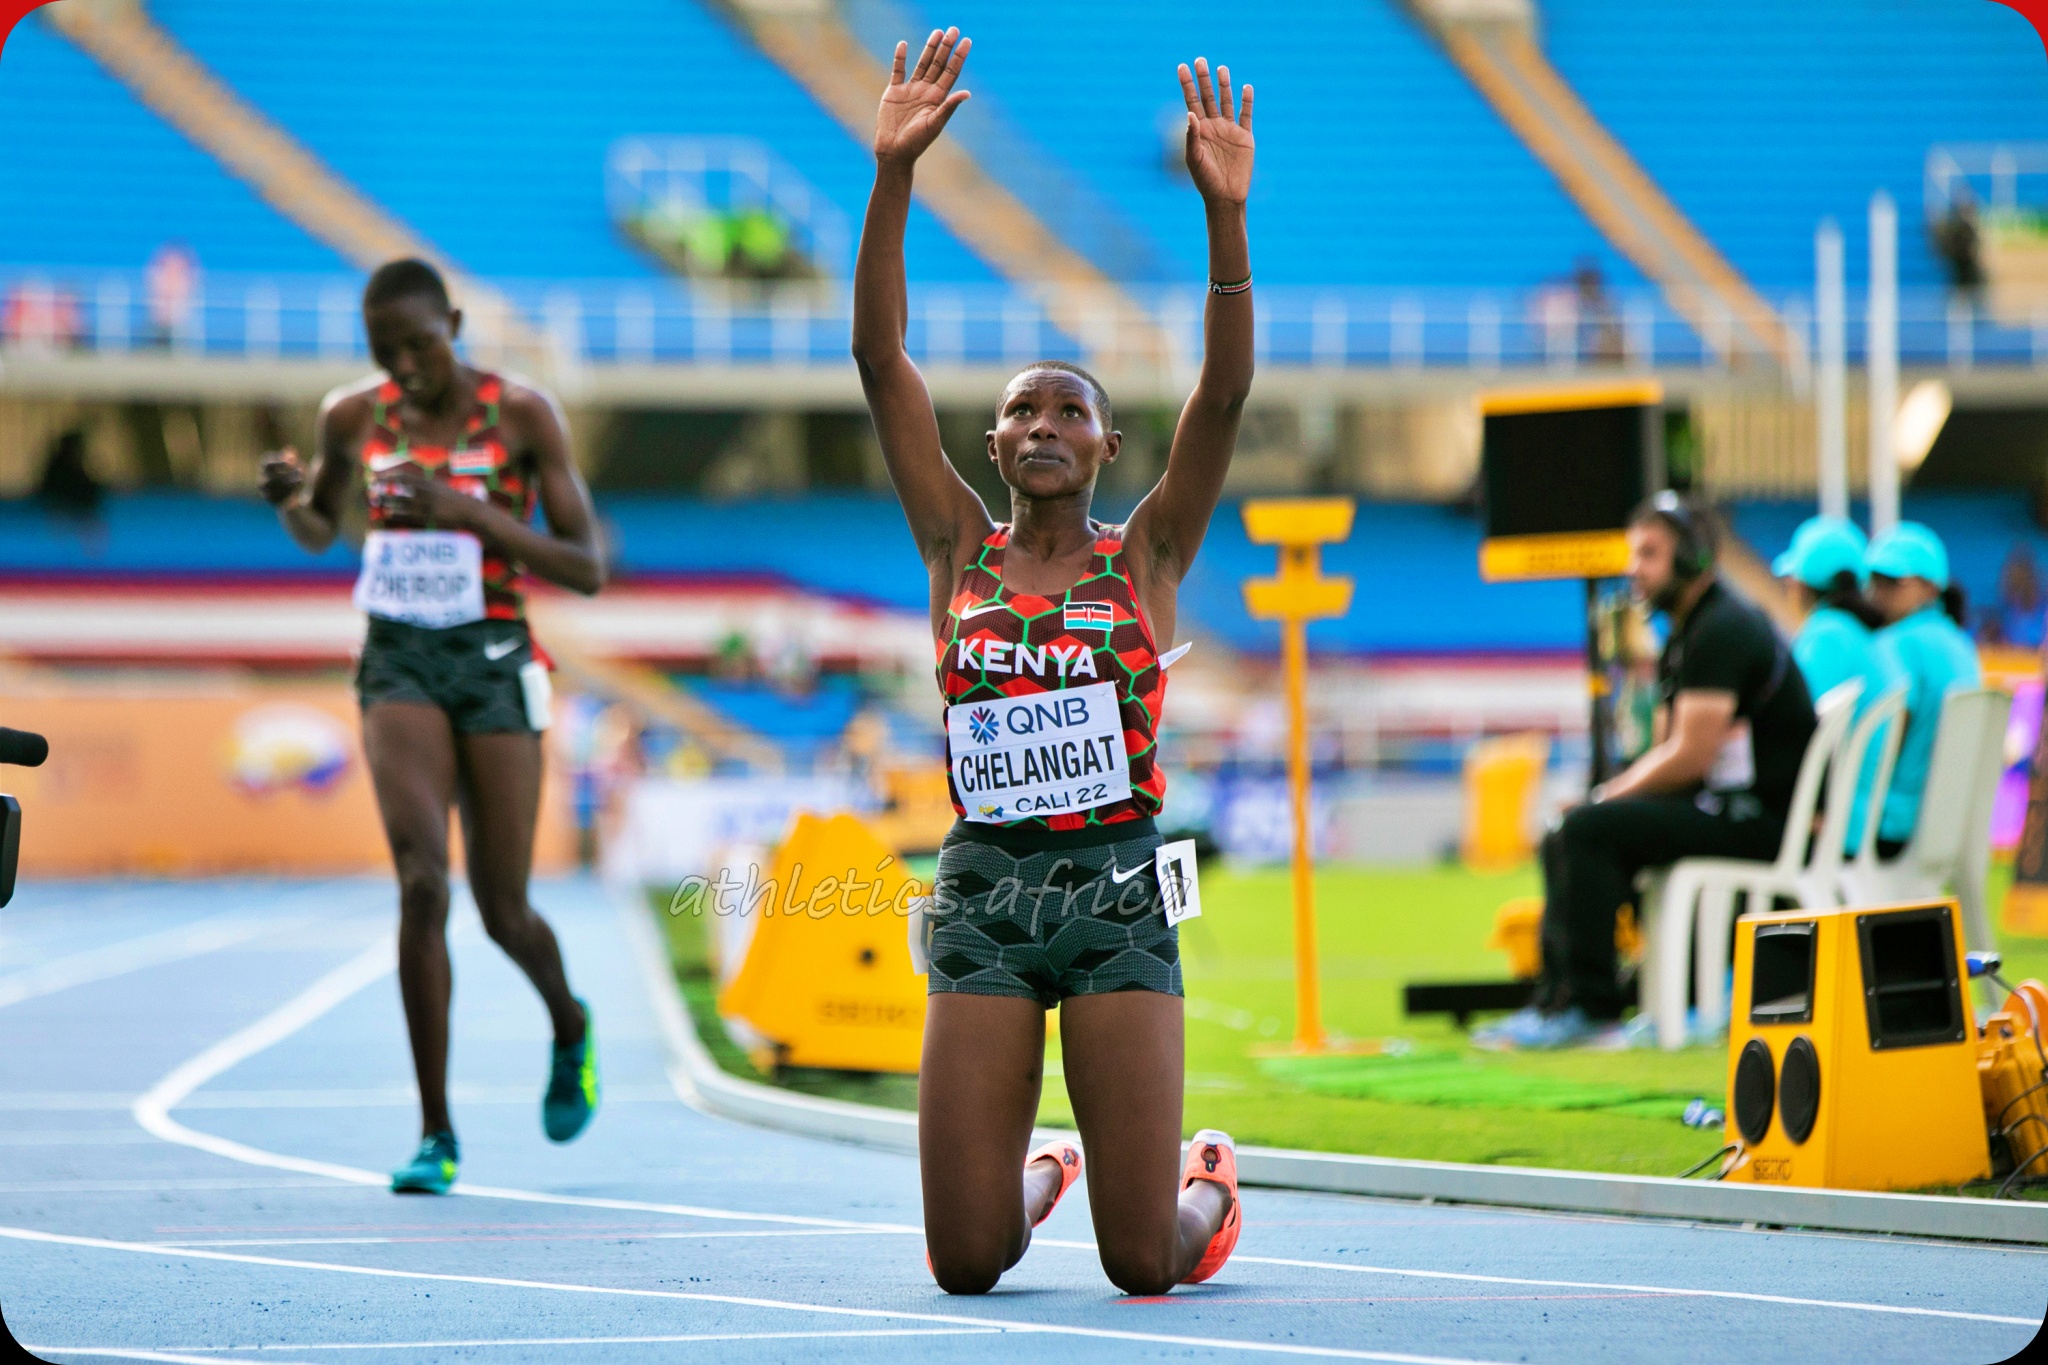 Kenya's Betty Chelangat celebrates her 3000m win at the World Athletics U20 Championships Cali 22 / Photo credit: Marta Gorczynska for World Athletics